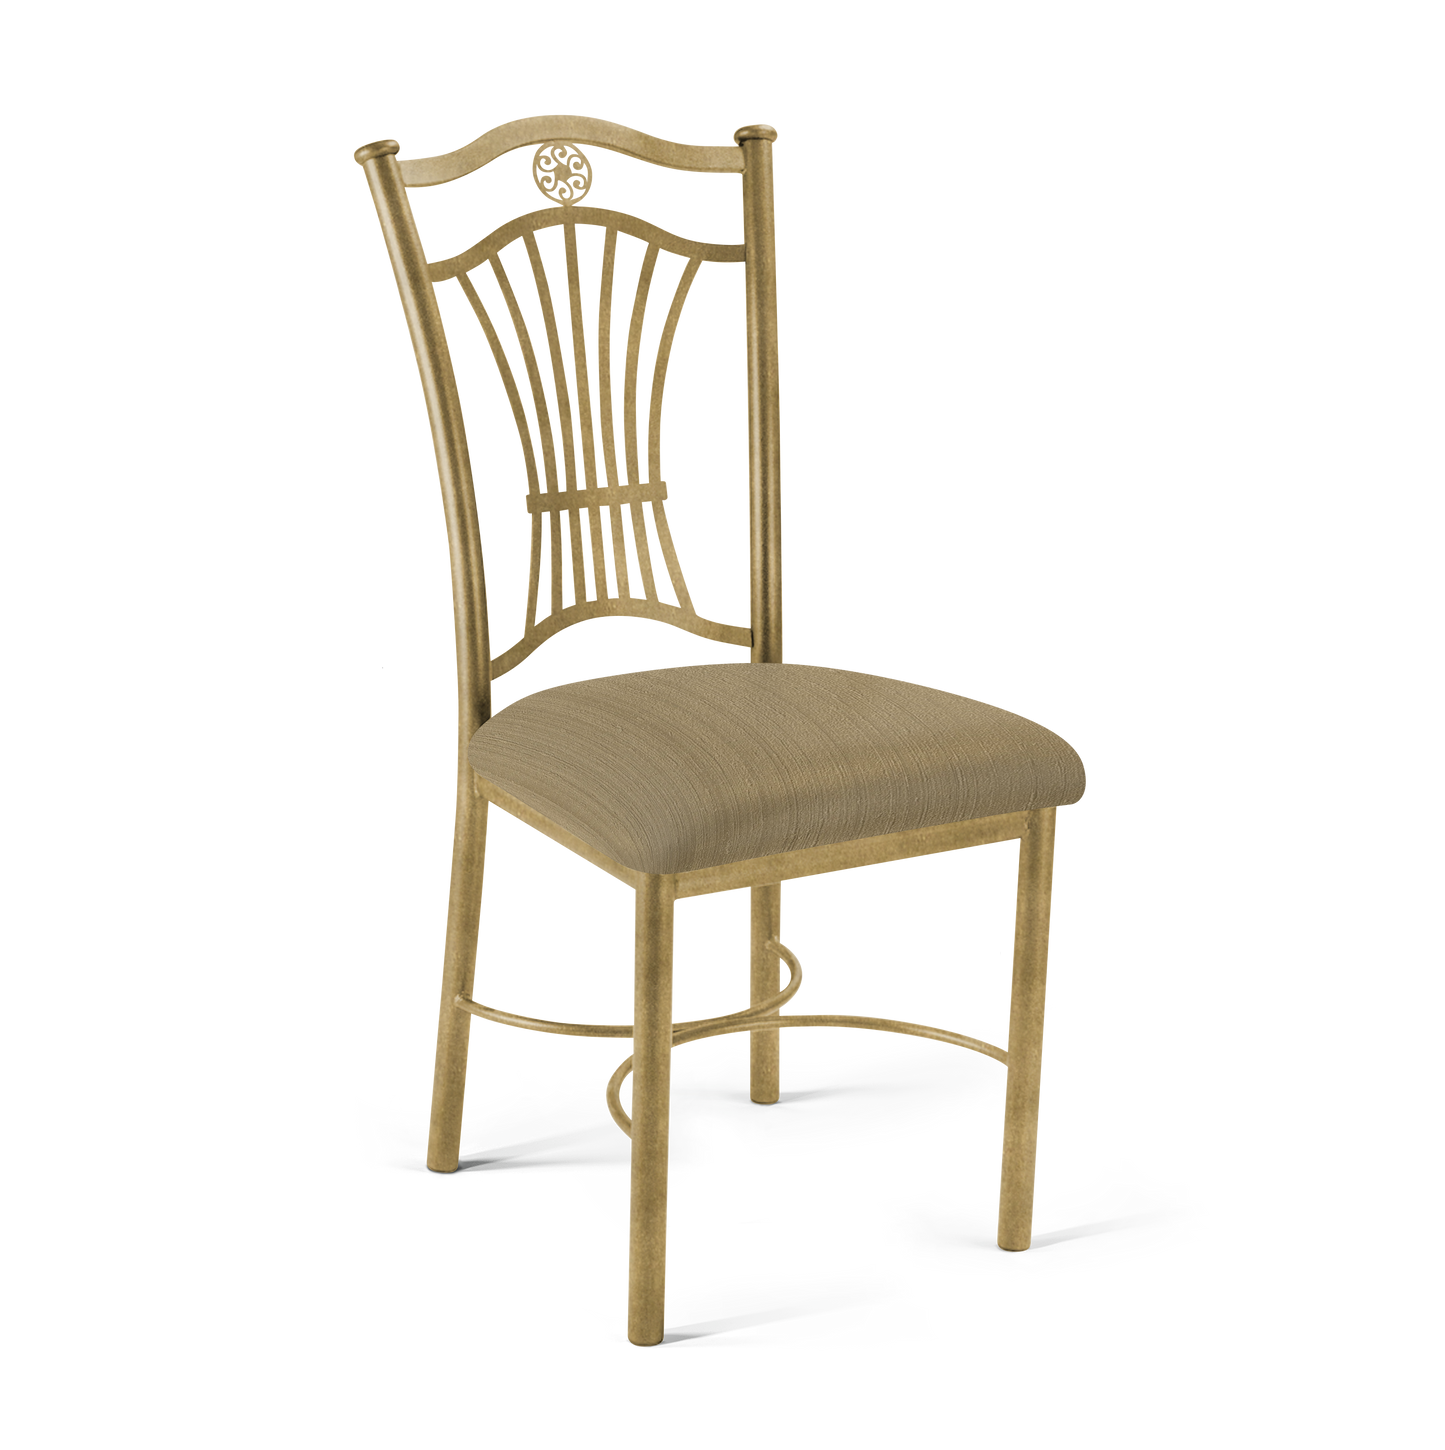 Trim Fit Chair - 425